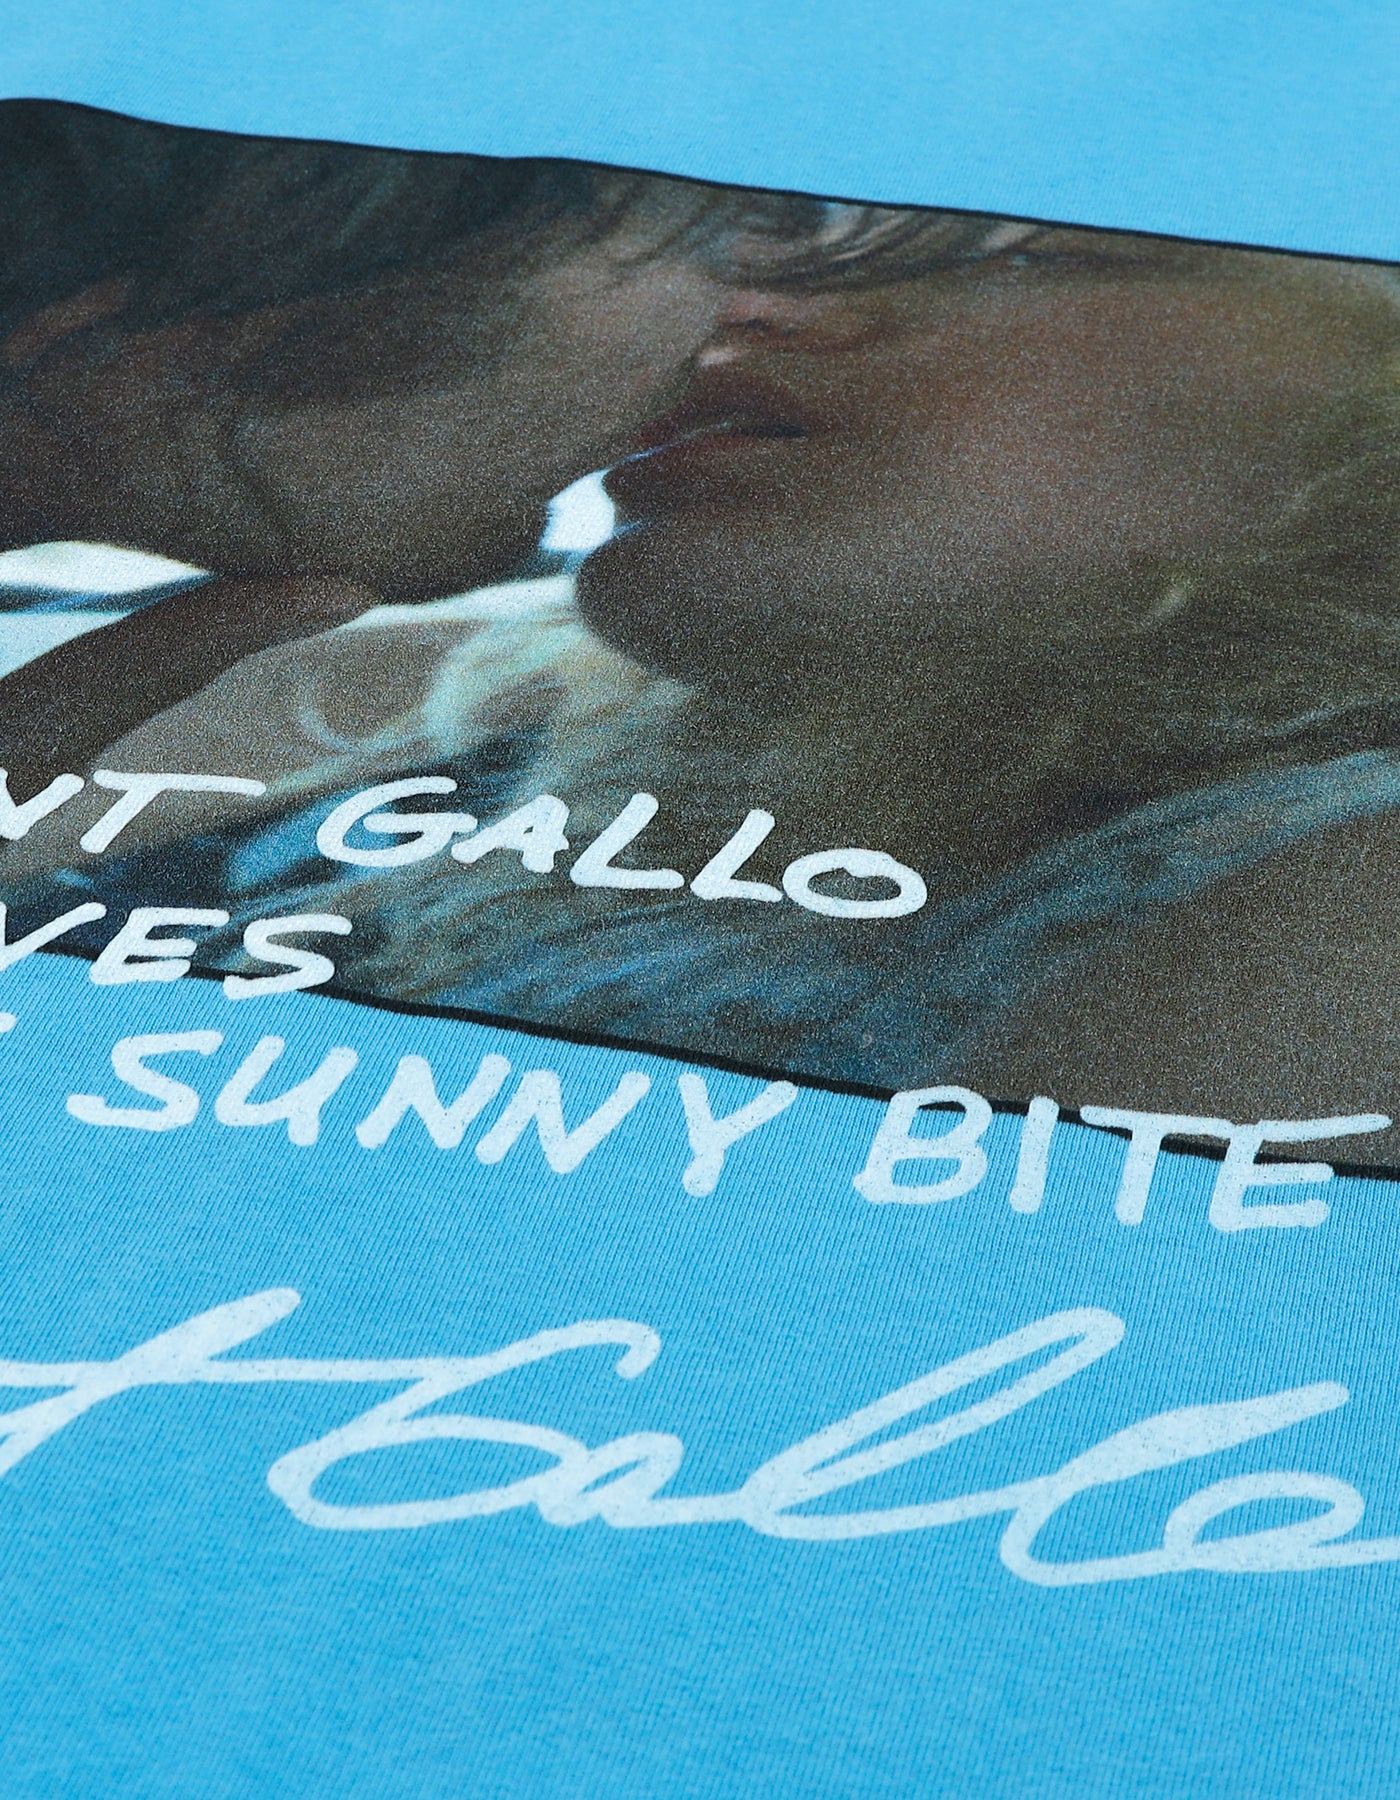 Vincent Gallo x little sunny bite photo long tee / BLUE